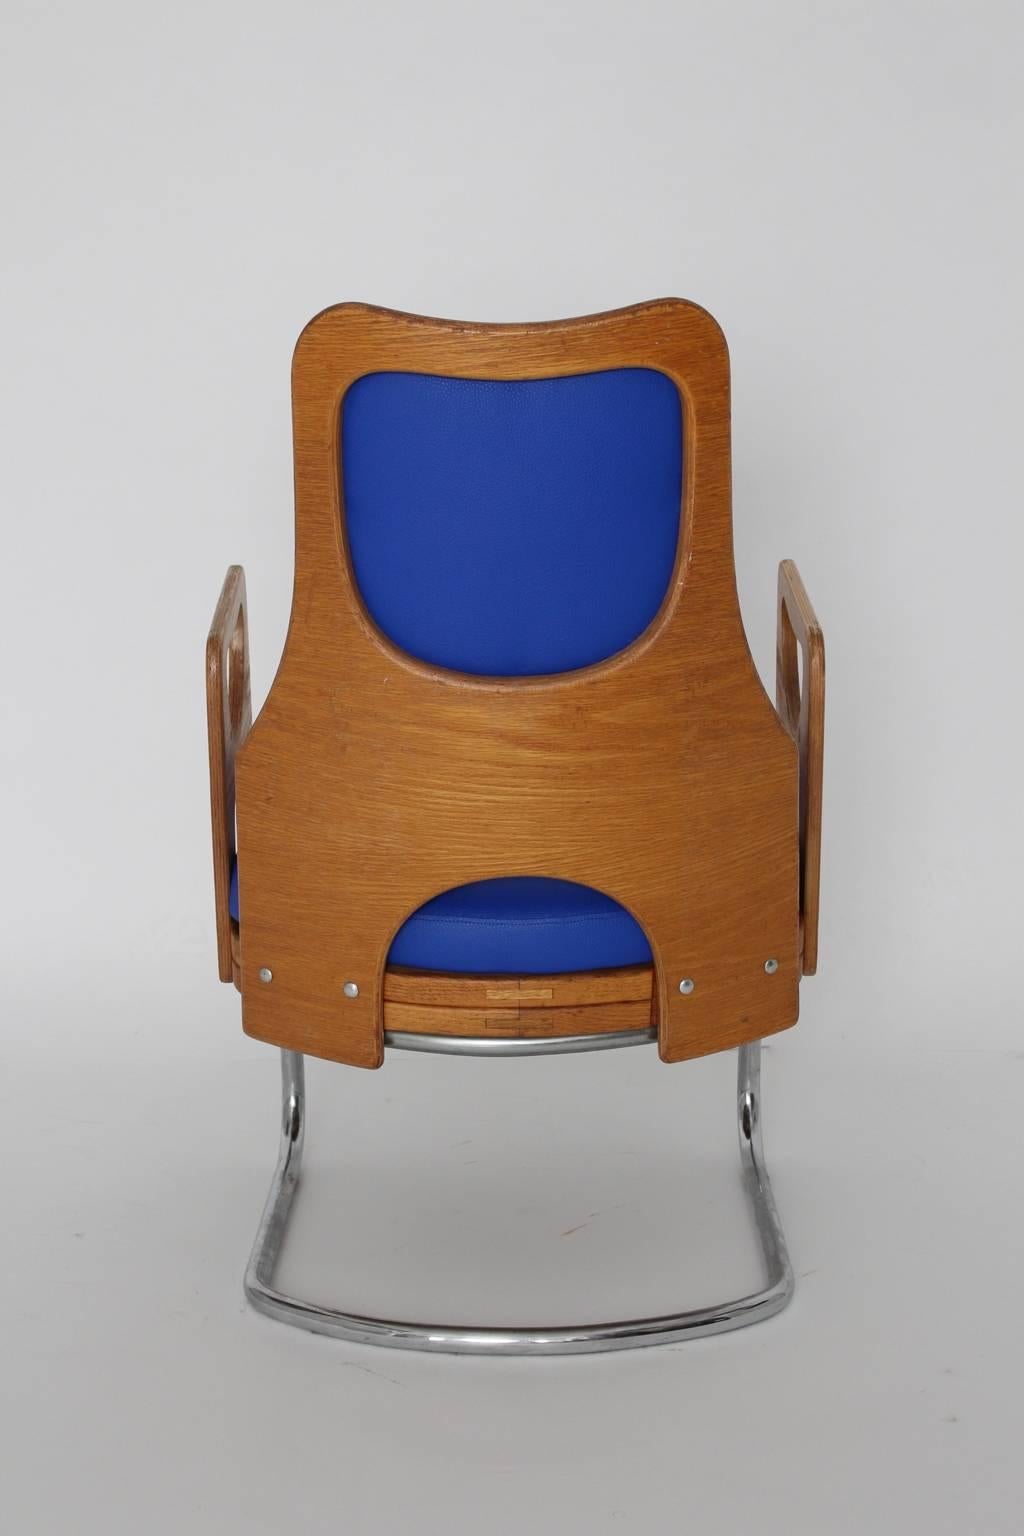 Scandinavian Space Age Blue Vintage Teak Armchair or Lounge Chair 1960s For Sale